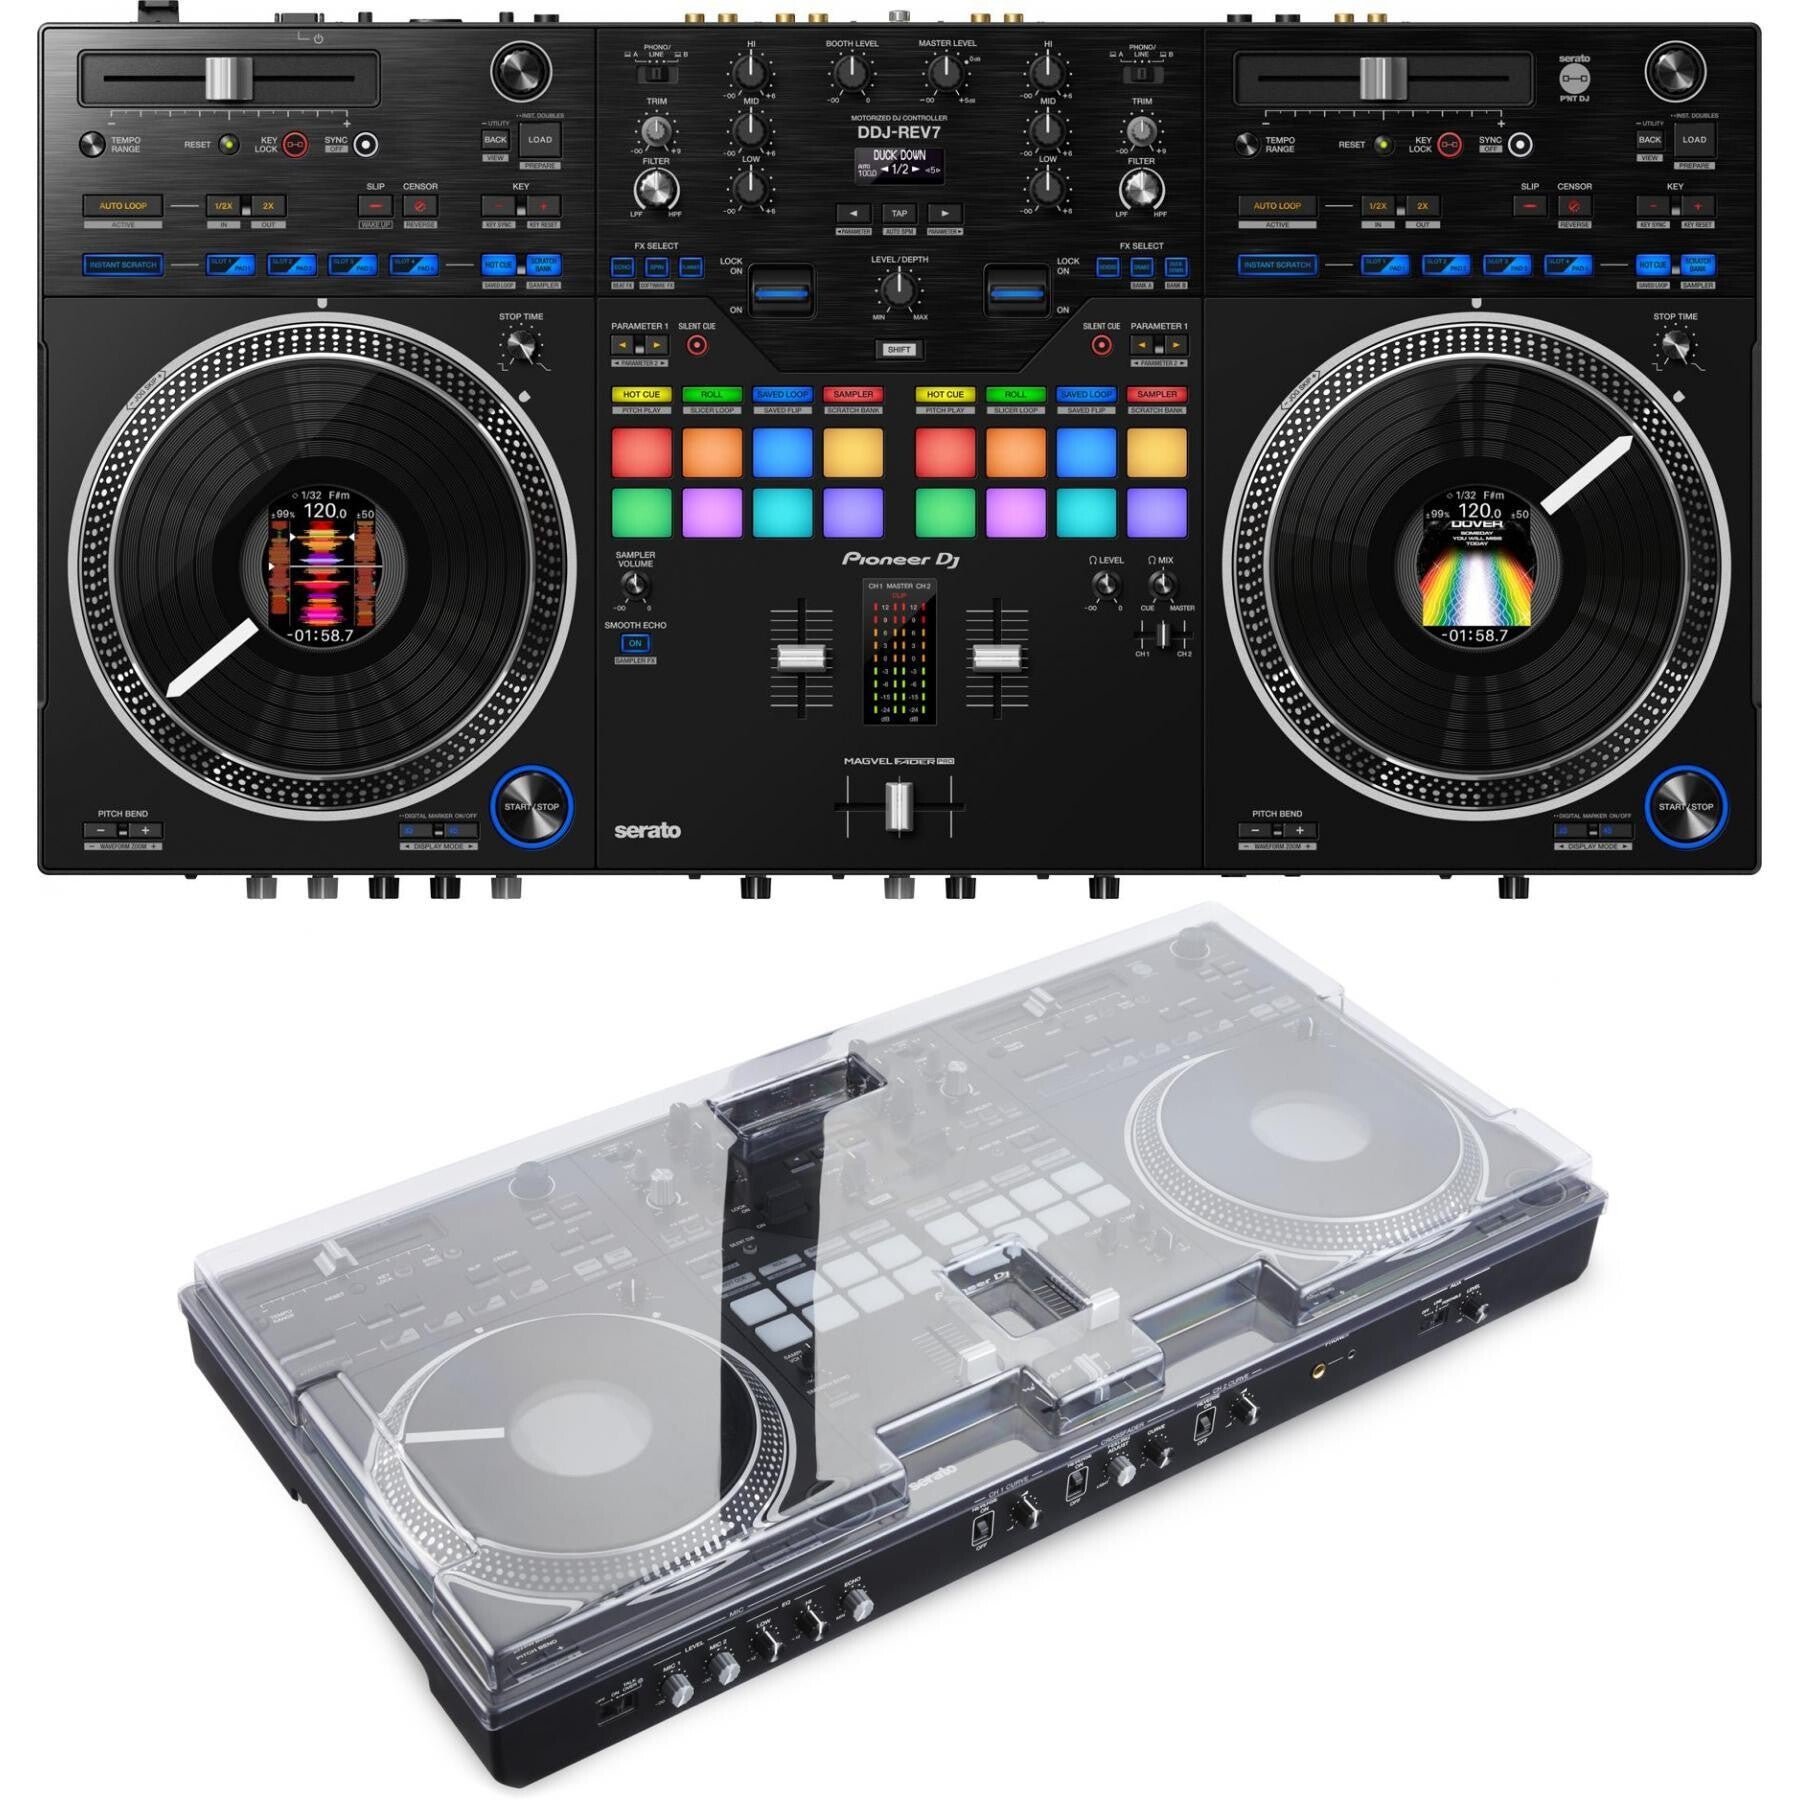 Pioneer DJ DDJ-REV7 2-deck Serato DJ Controller with Decksaver